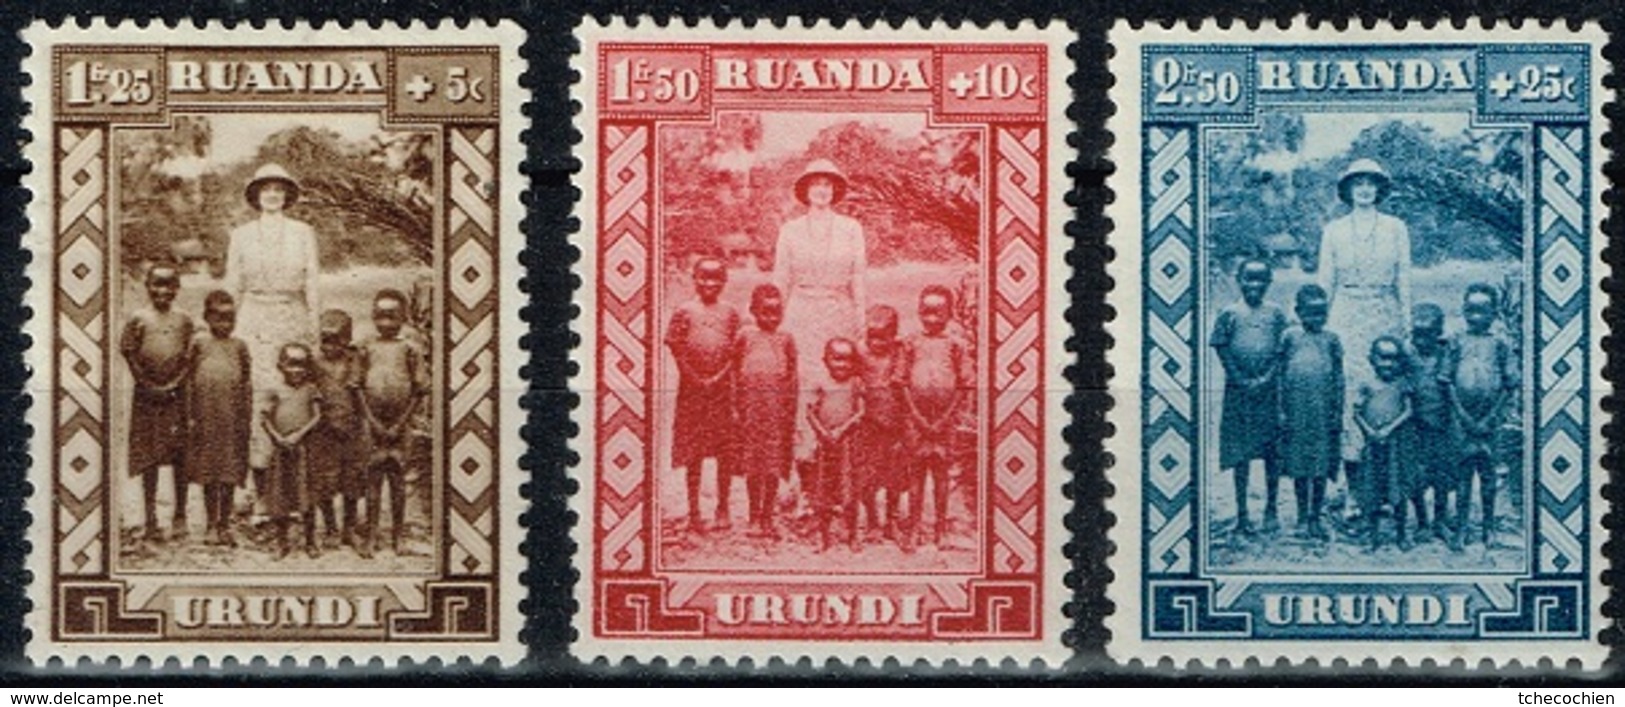 Ruanda-Urundi - 1936 - Y&T N° 108* à 110*, Neufs Avec Traces De Charnières - Neufs